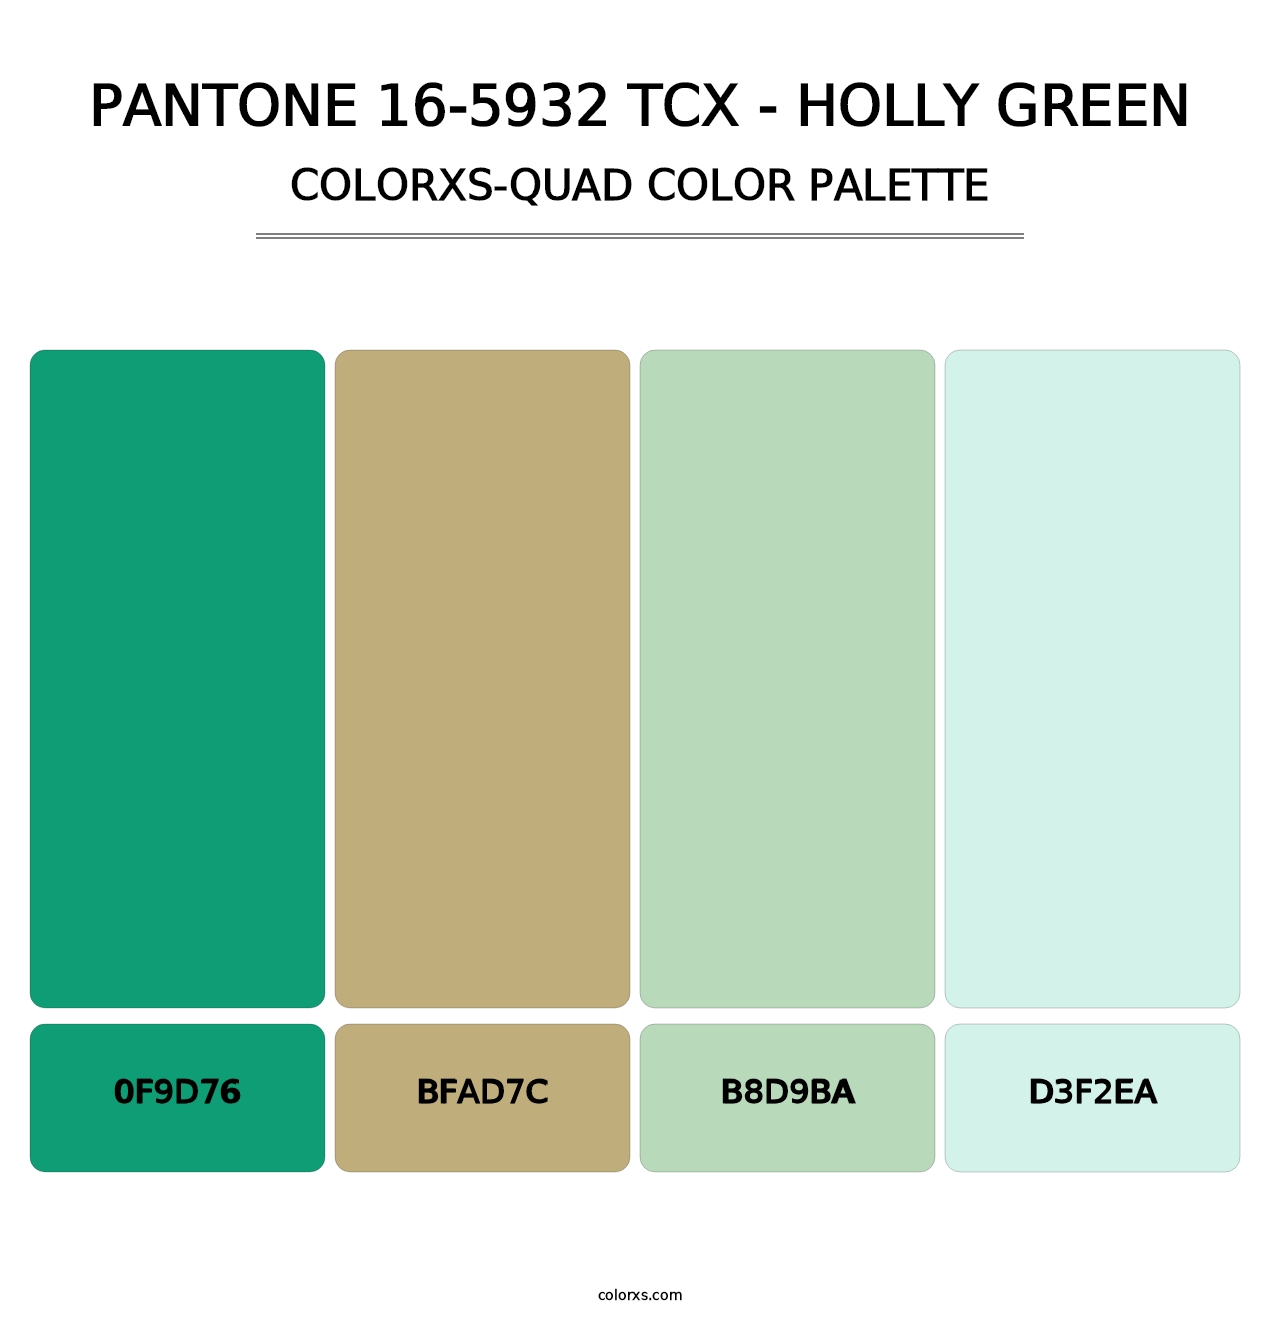 PANTONE 16-5932 TCX - Holly Green - Colorxs Quad Palette